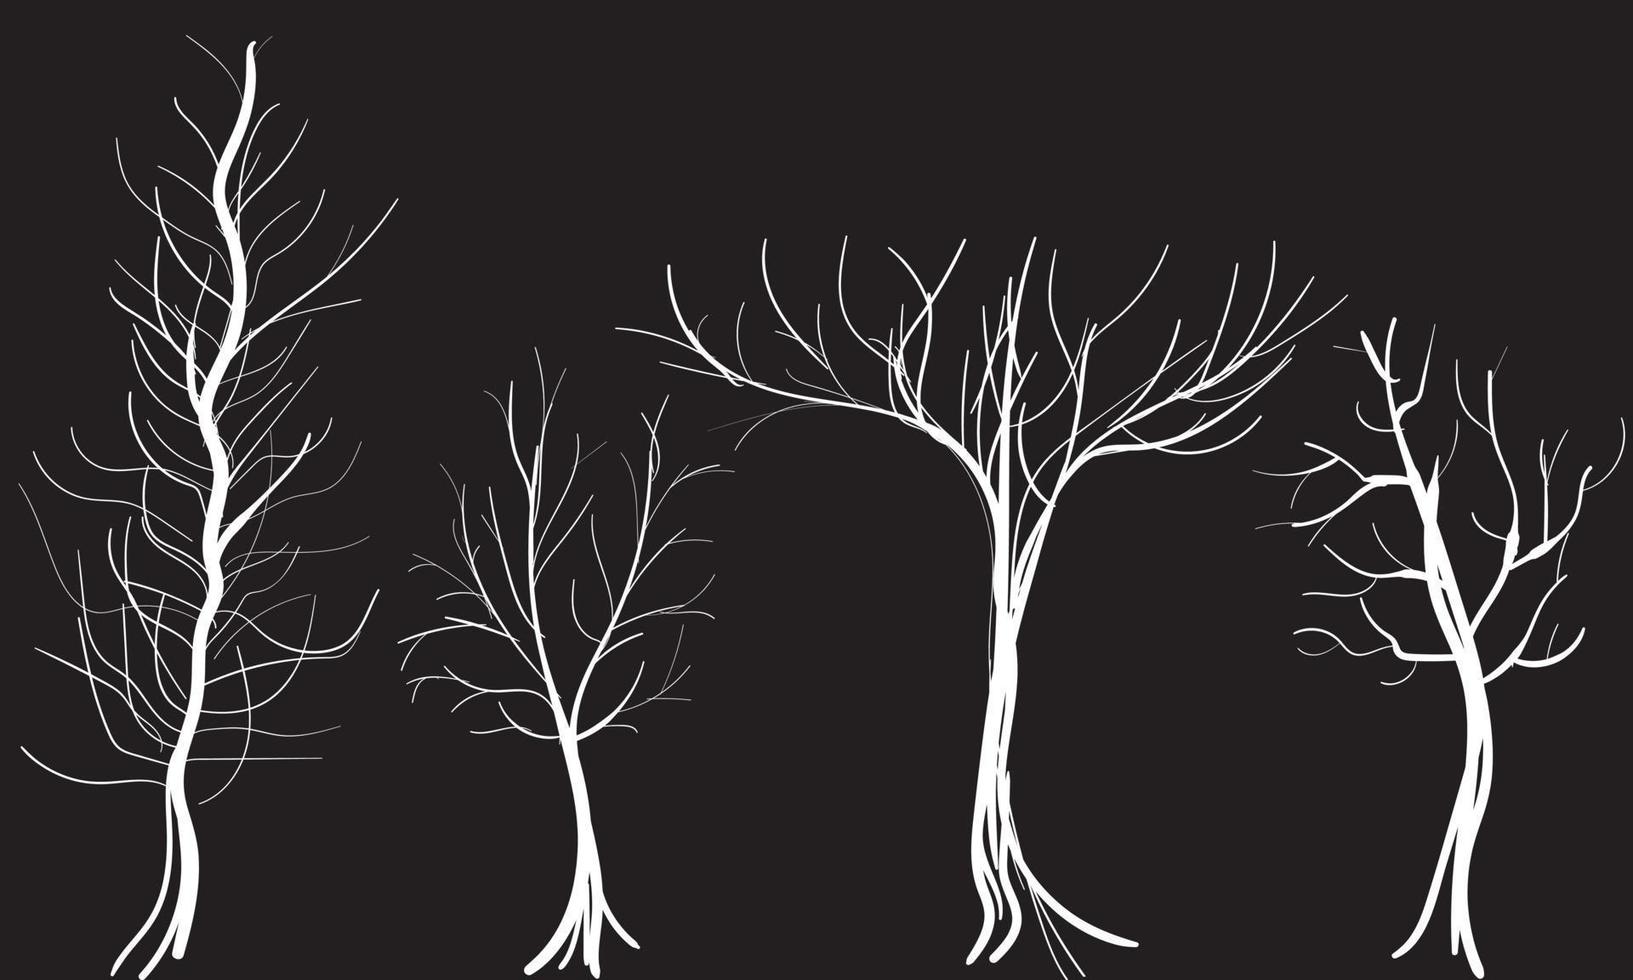 conjunto de silueta de árbol de rama otoñal vector